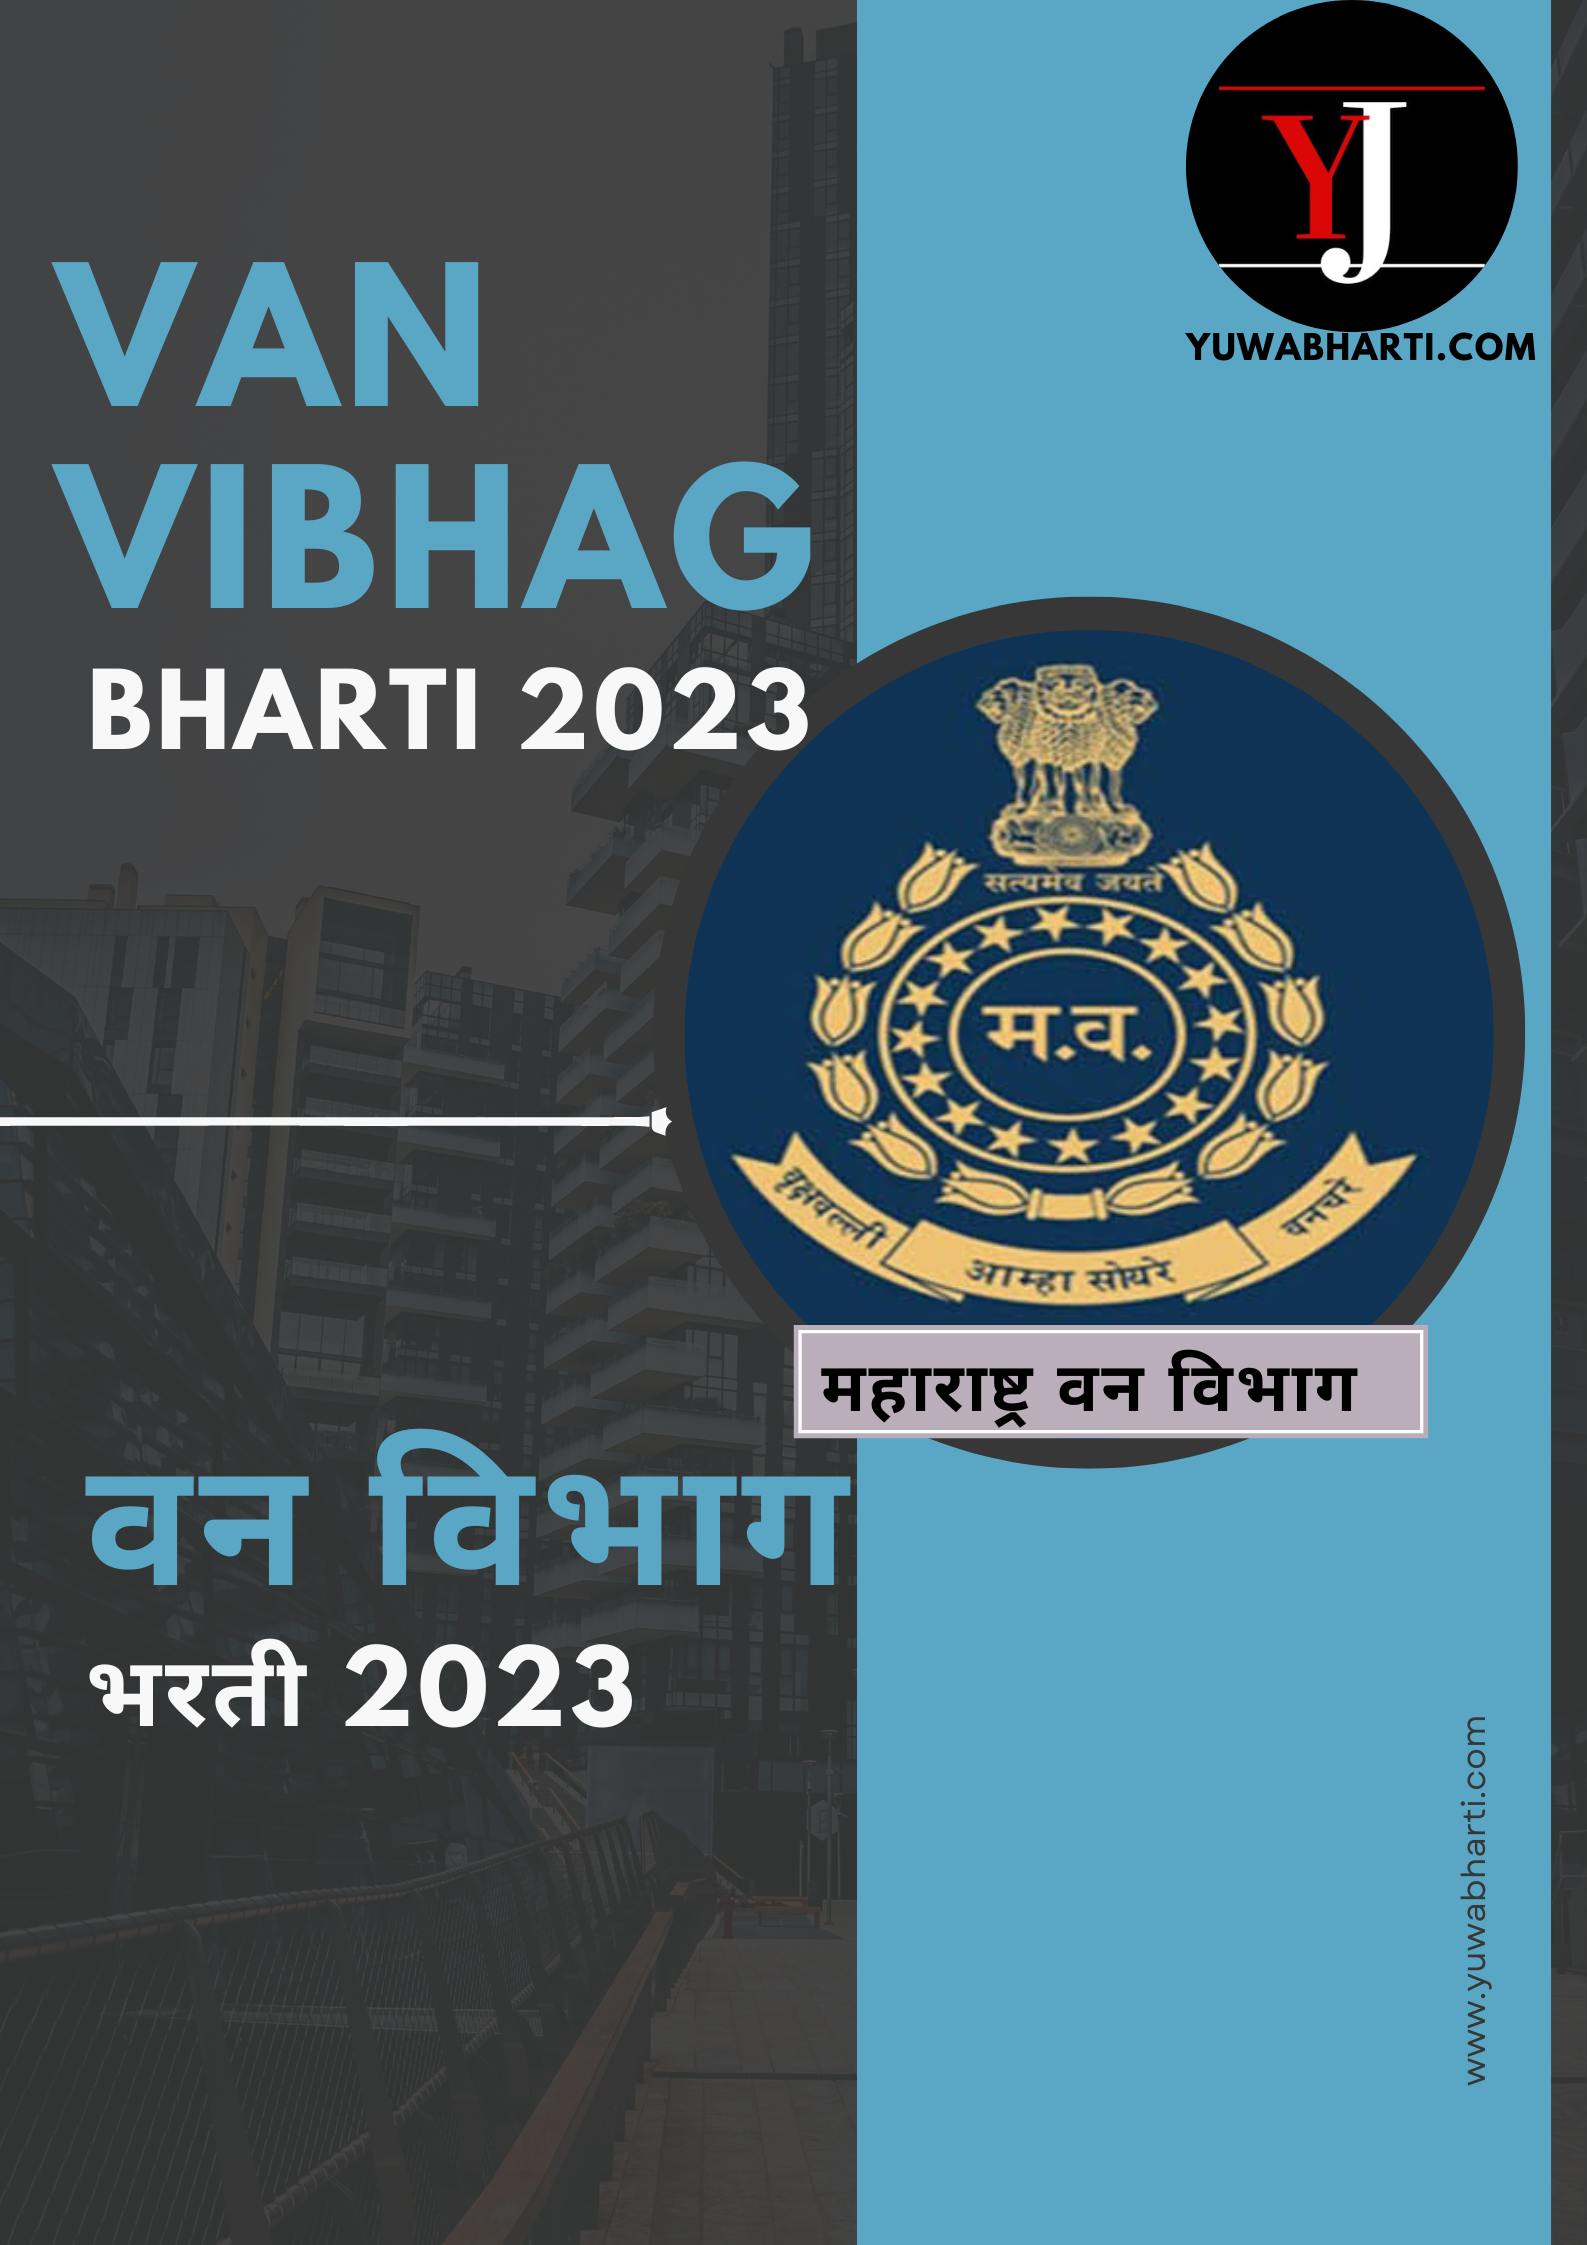 Van Vibhag Sindhudurg Recruitment 2023: Apply for Technical Assistant Post  in Van Vibhag Sindhudurg Bharati 2023